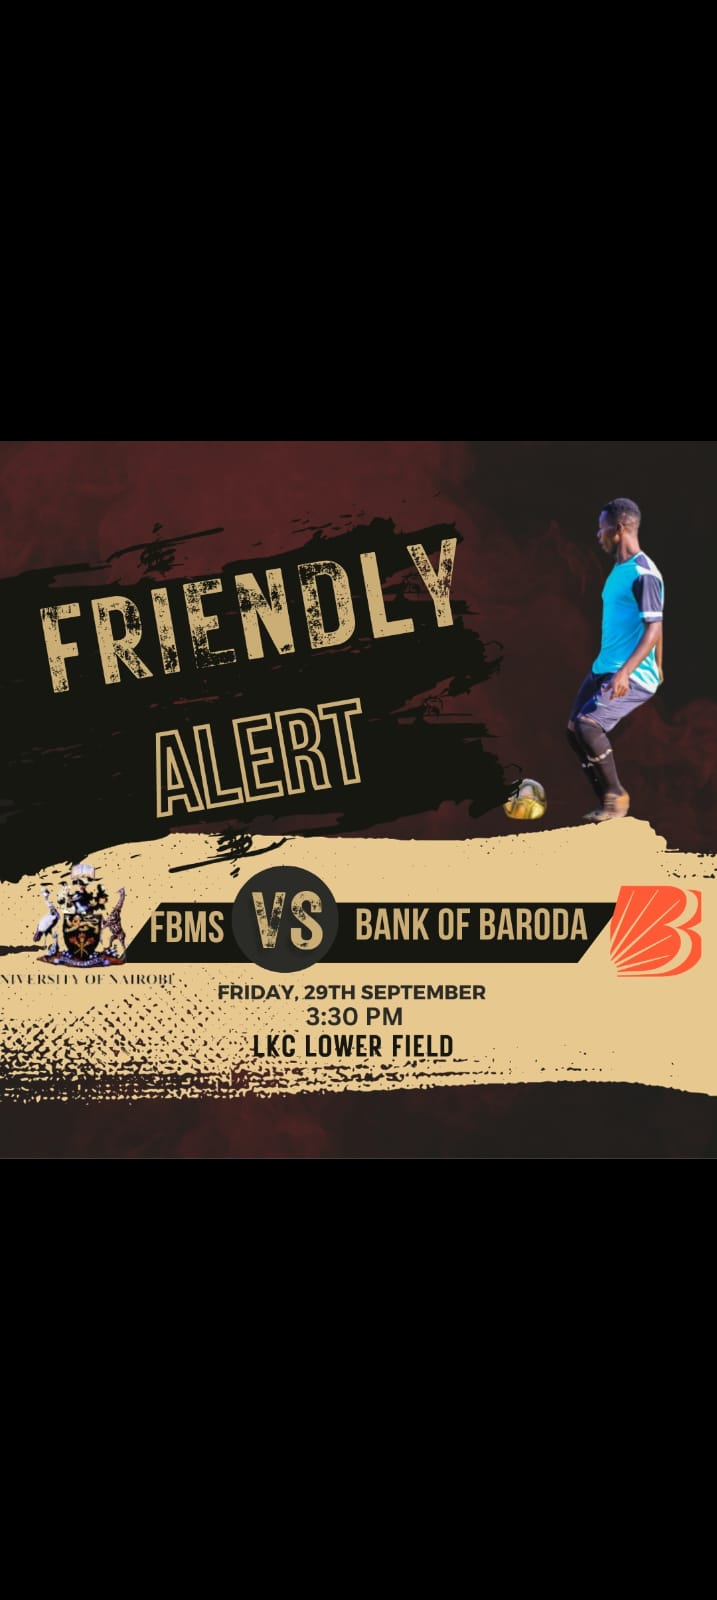 Friendly btwn Uon FOB vs Bank of Baroda